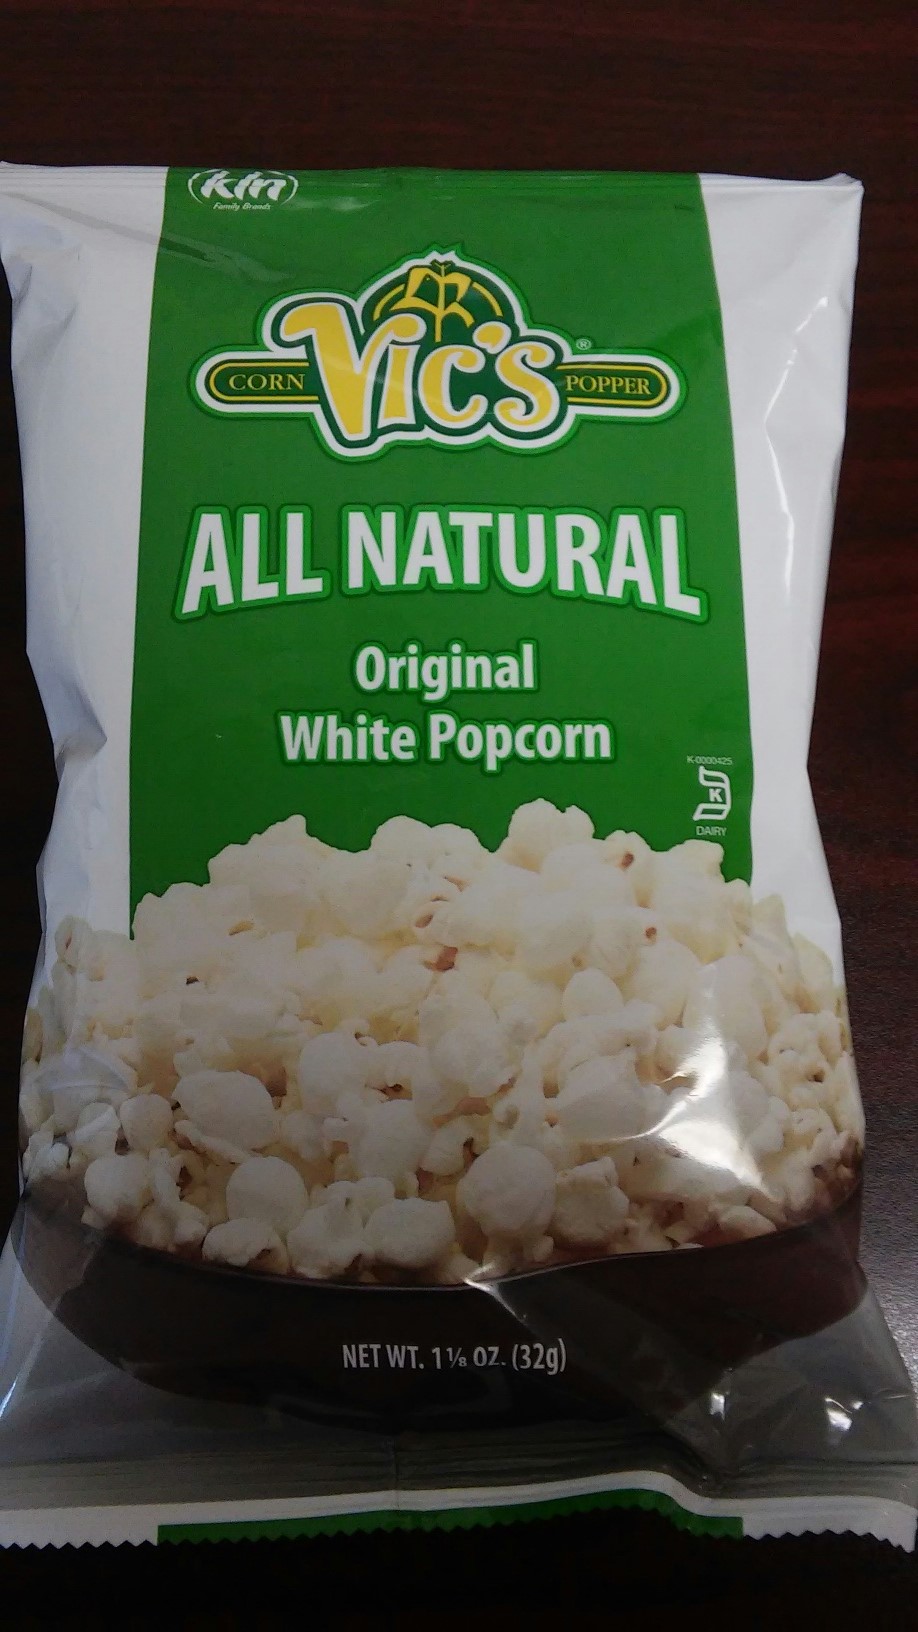 Barrel O' Fun Snack Foods Co. Issues Allergy Alert On Undeclared Milk In Vic's Original Popcorn (1-1/8oz)